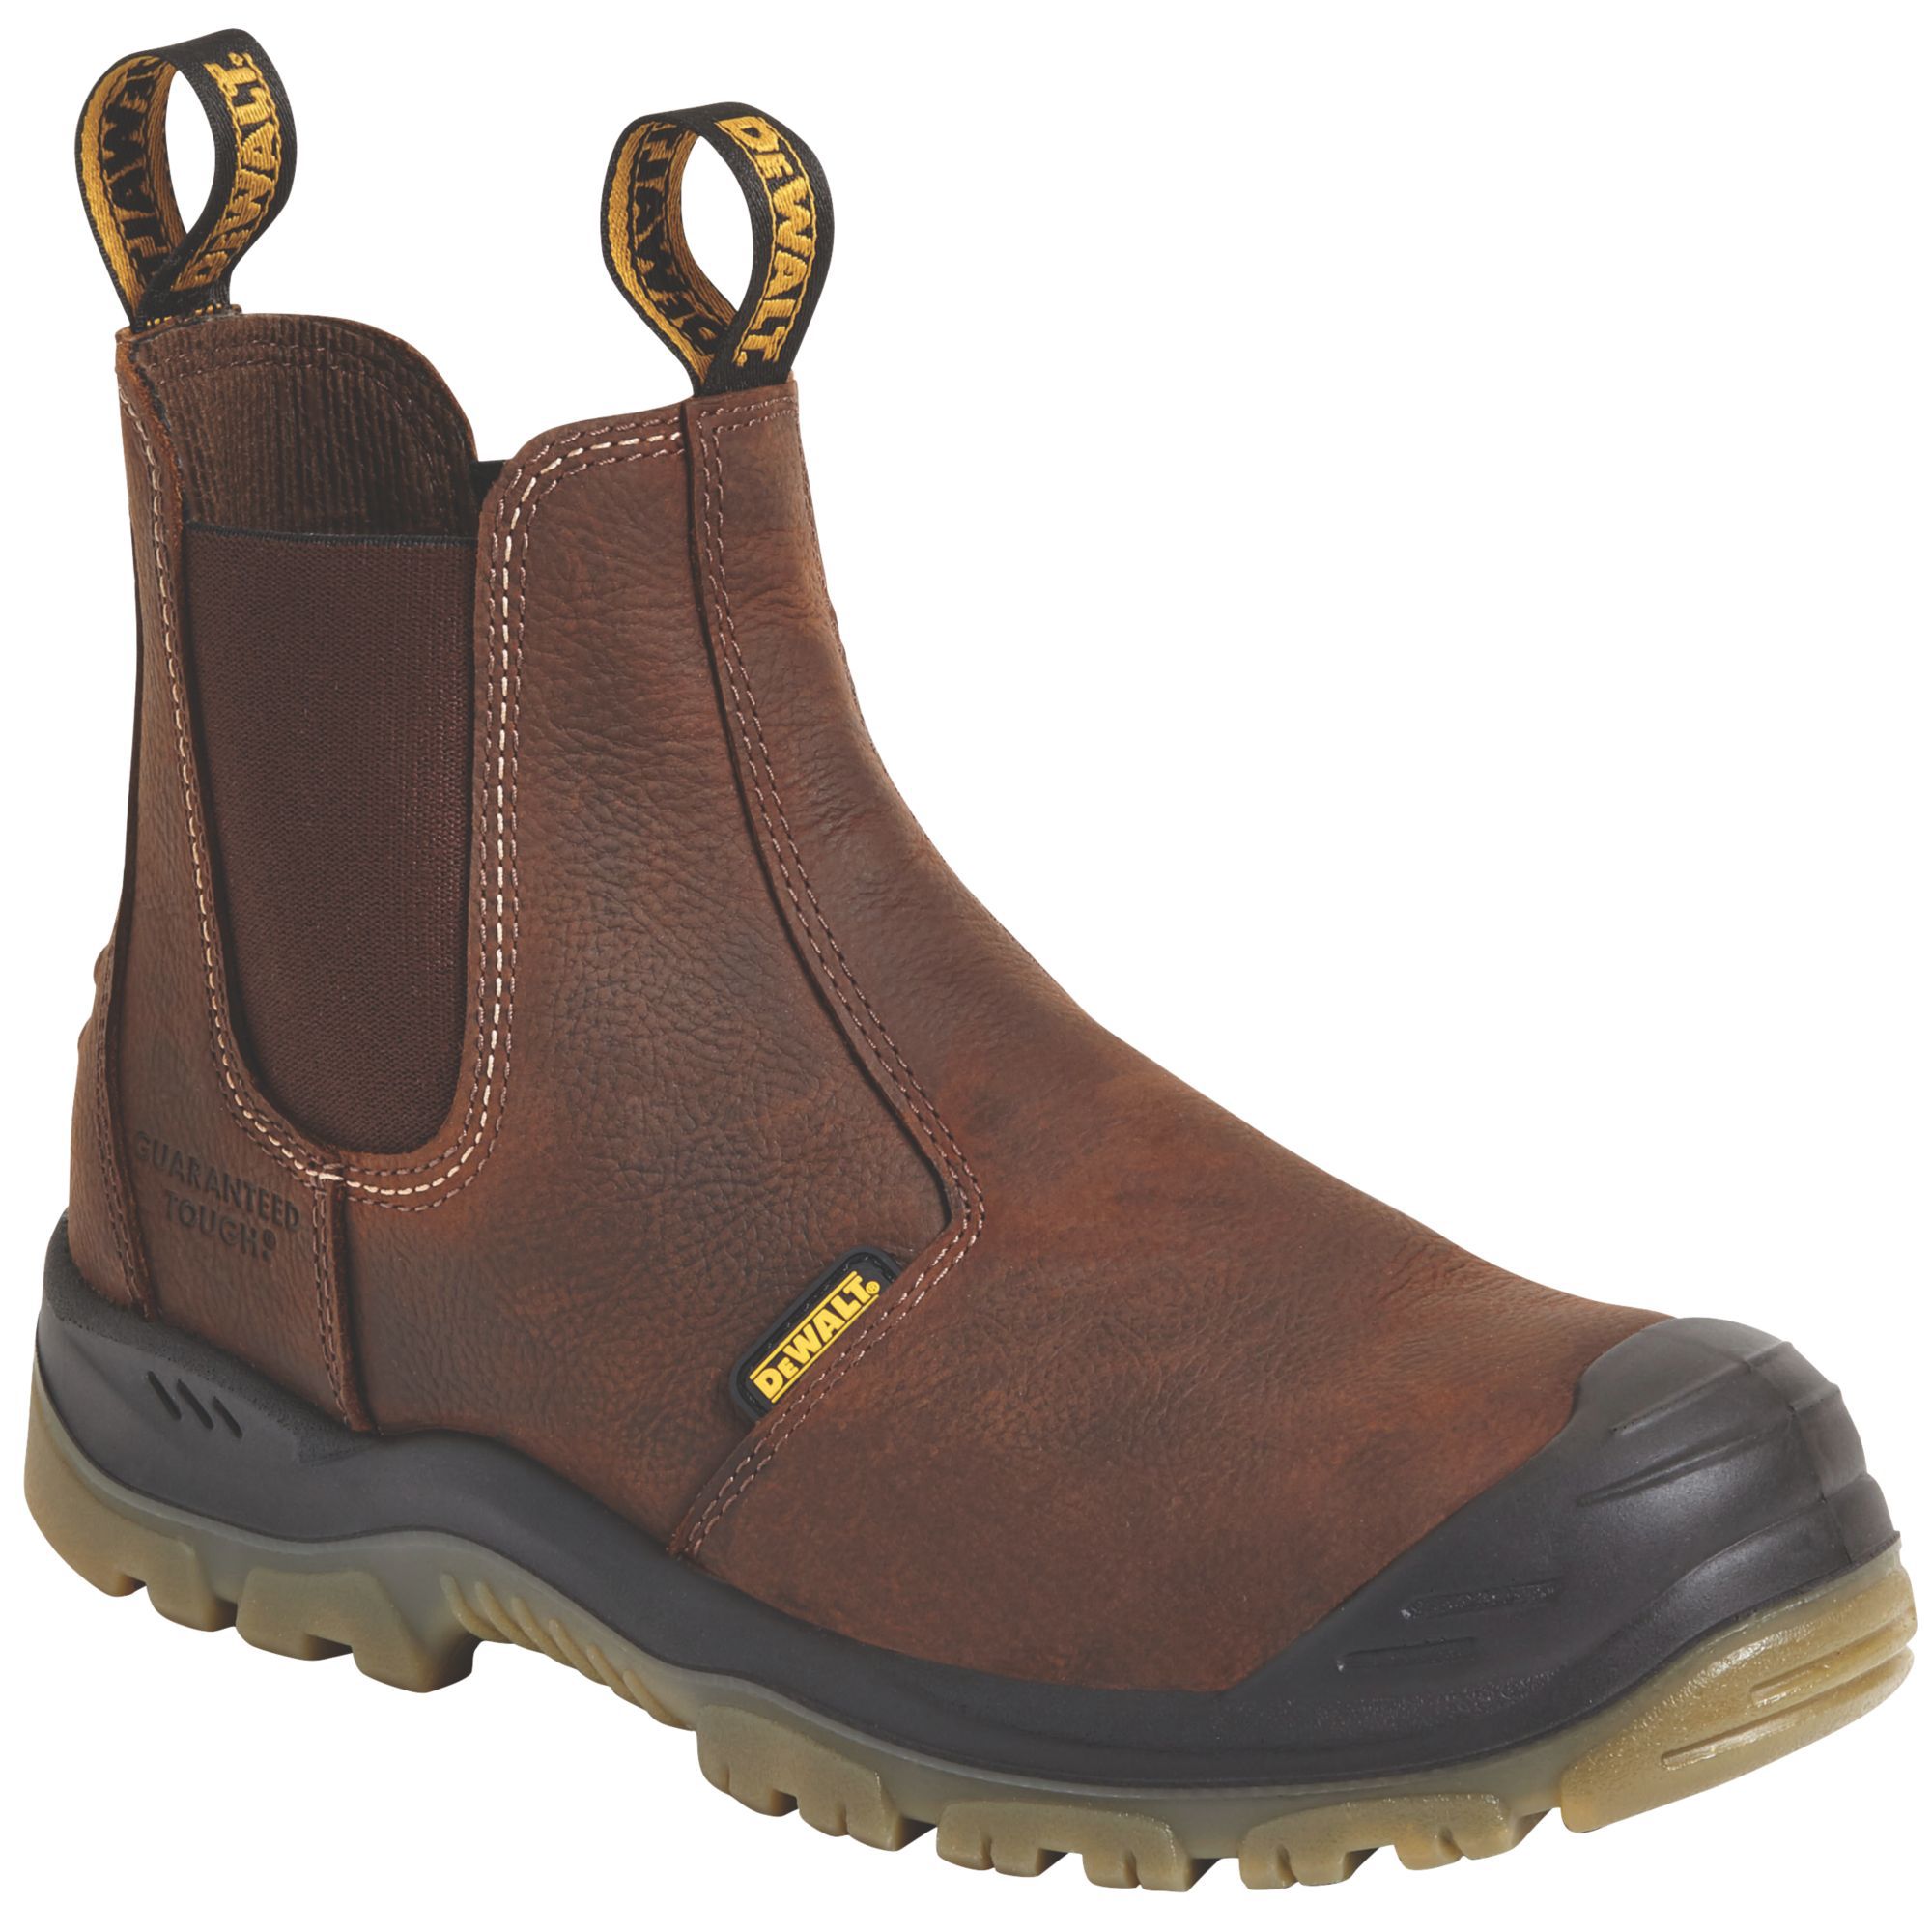 DeWalt Nitrogen Brown Dealer boots, Size 11